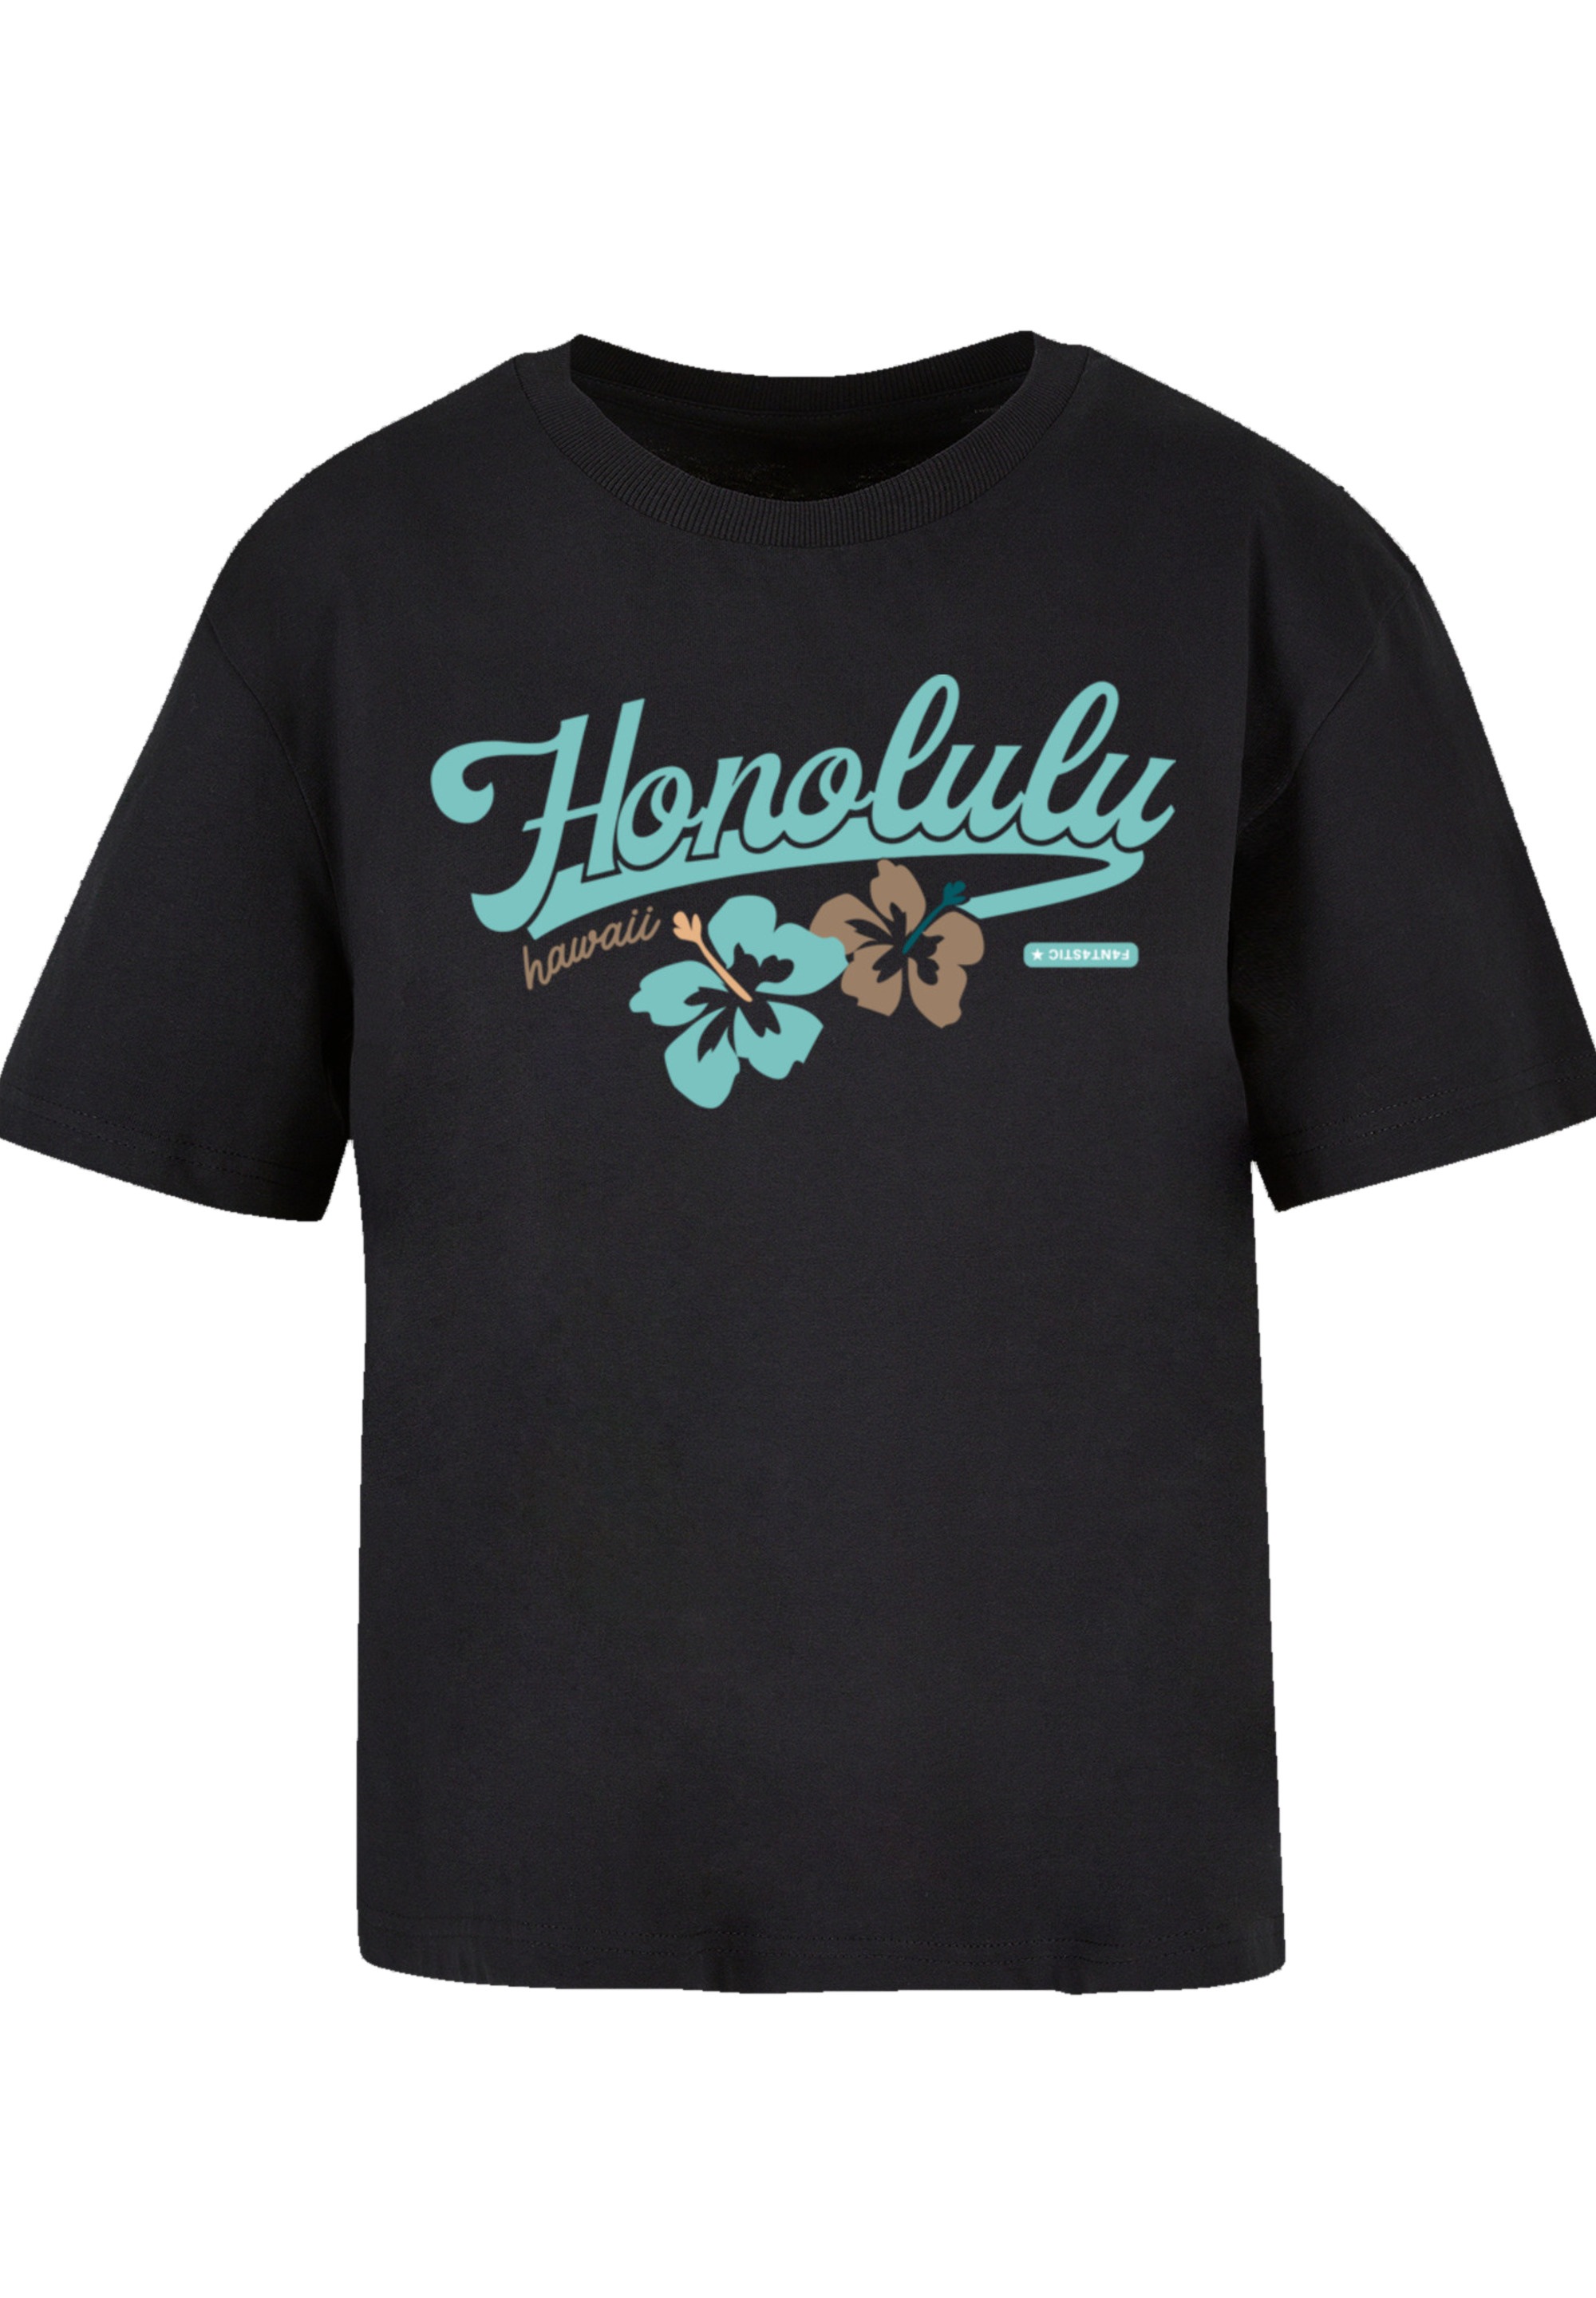 »PLUS F4NT4STIC T-Shirt kaufen Print Honolulu«, SIZE